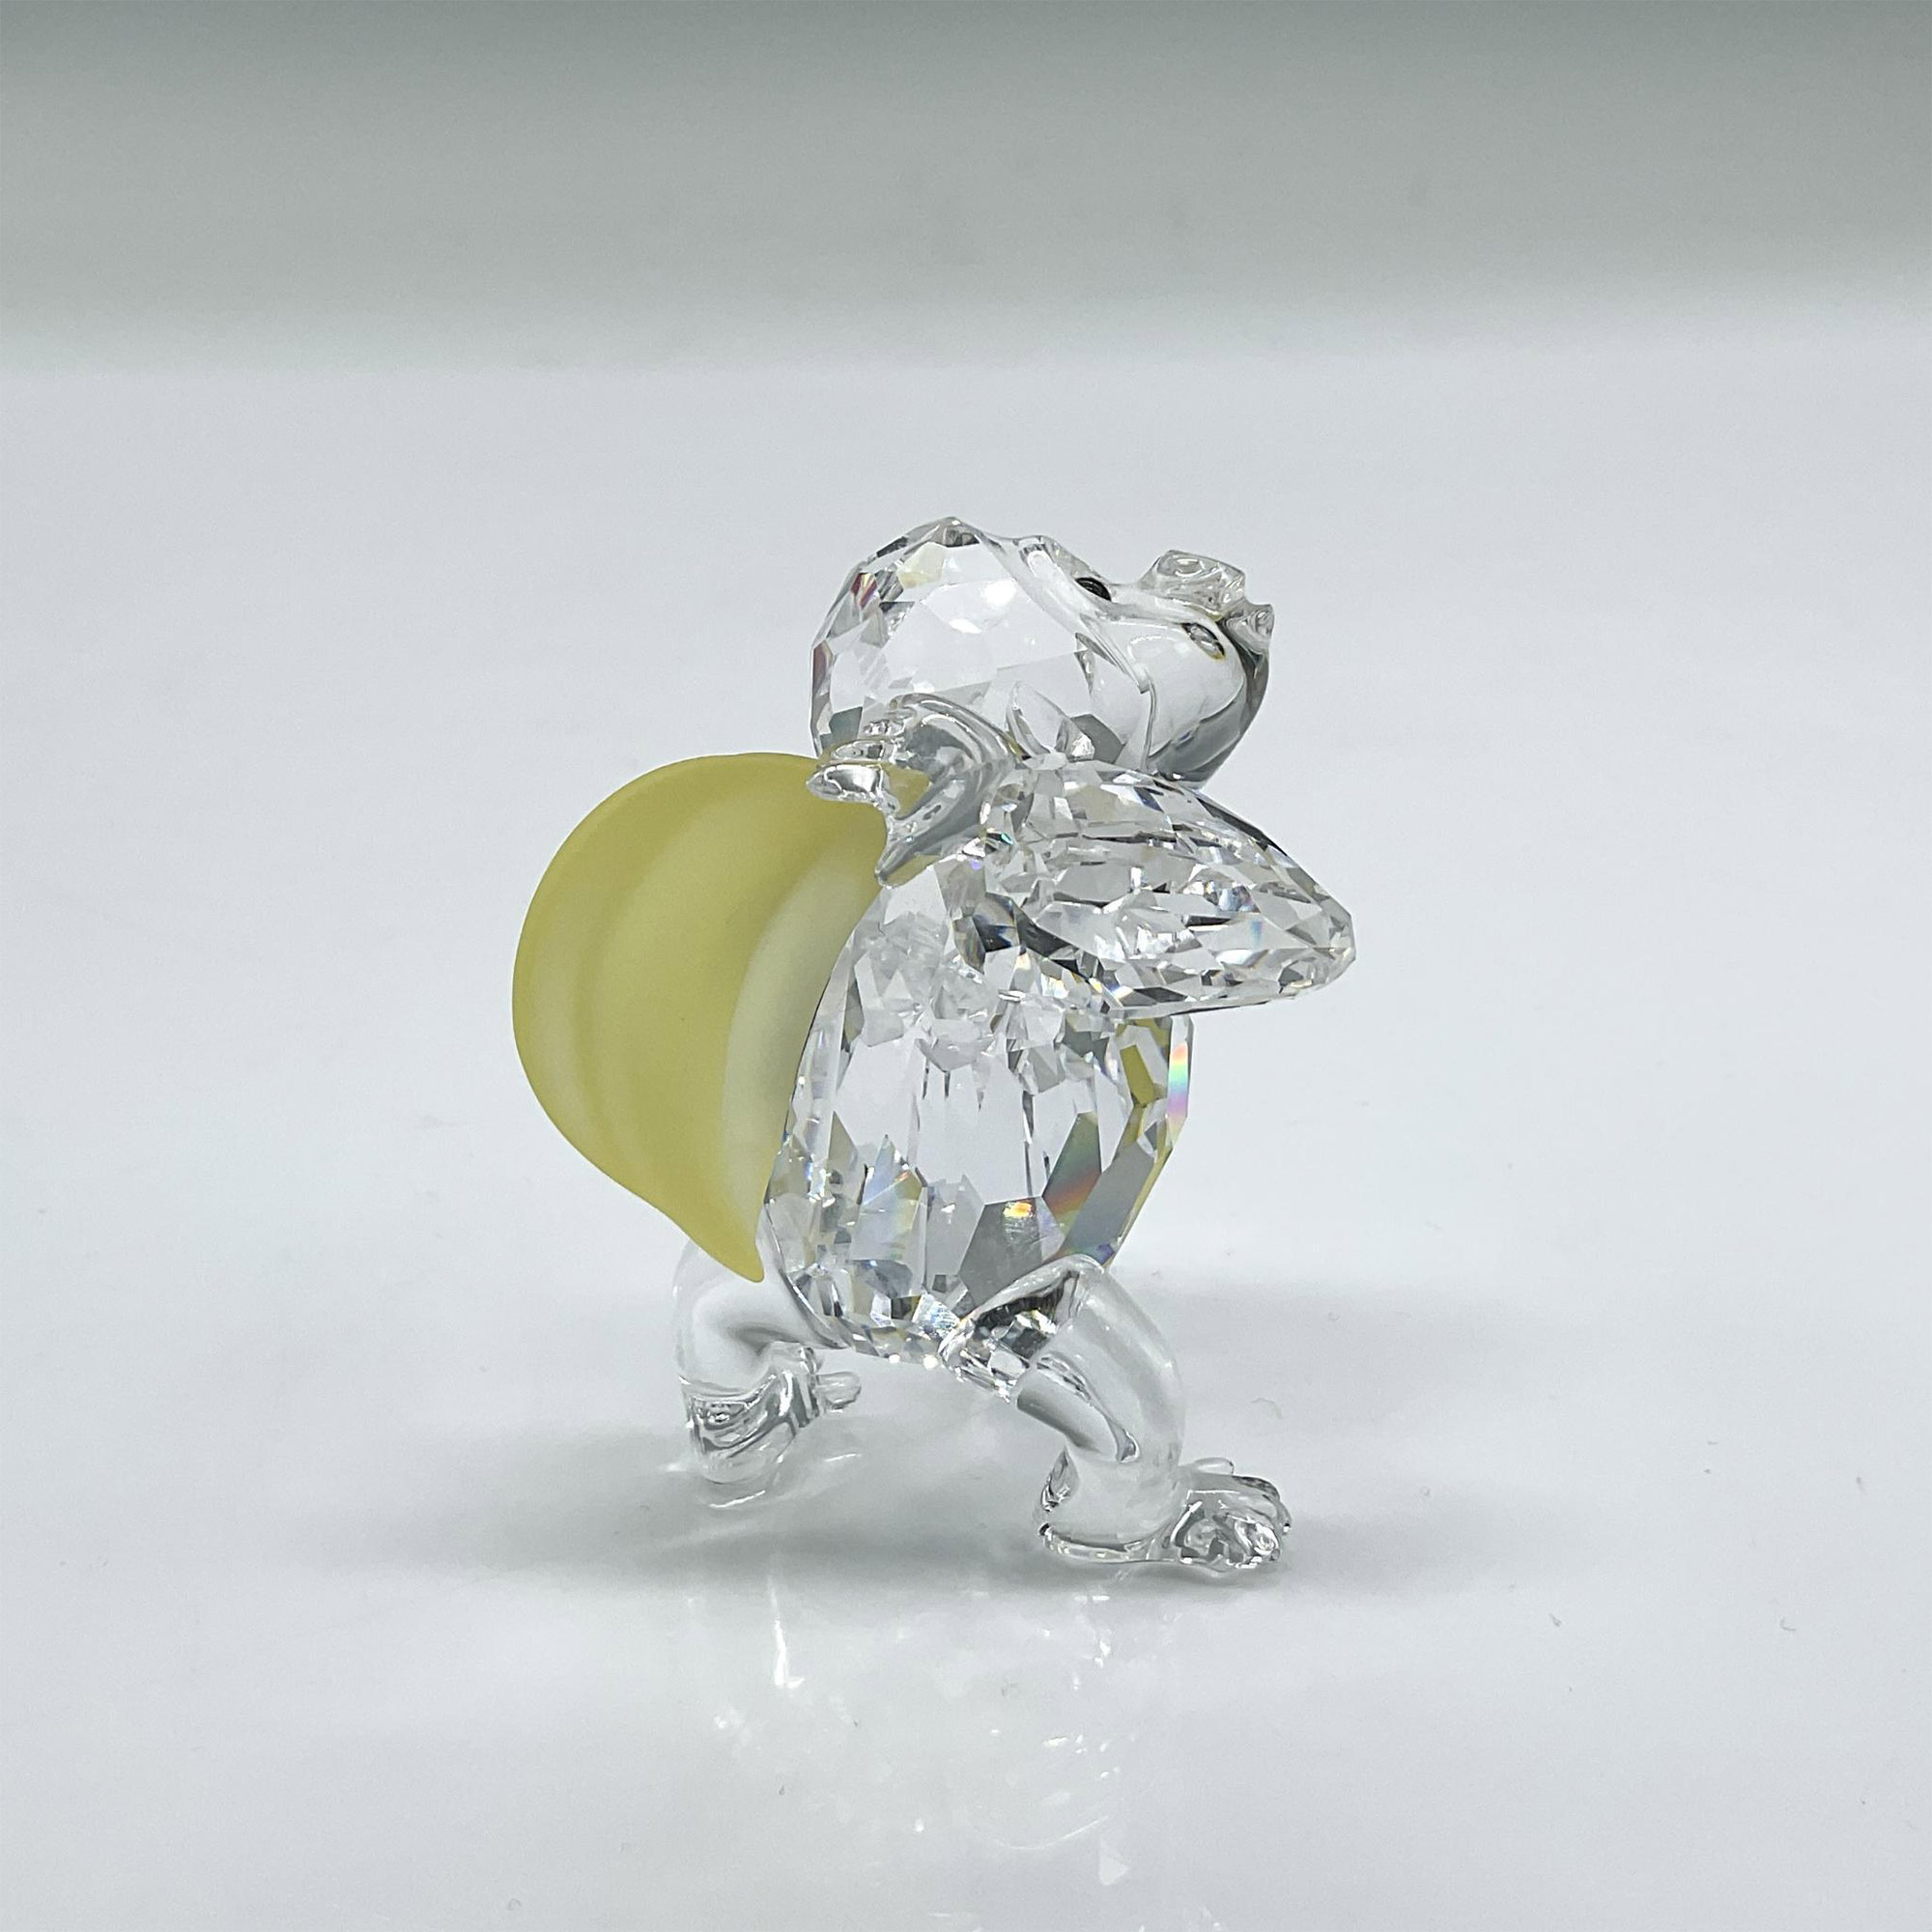 Swarovski Crystal Figurine, Young Gorilla - Image 3 of 4